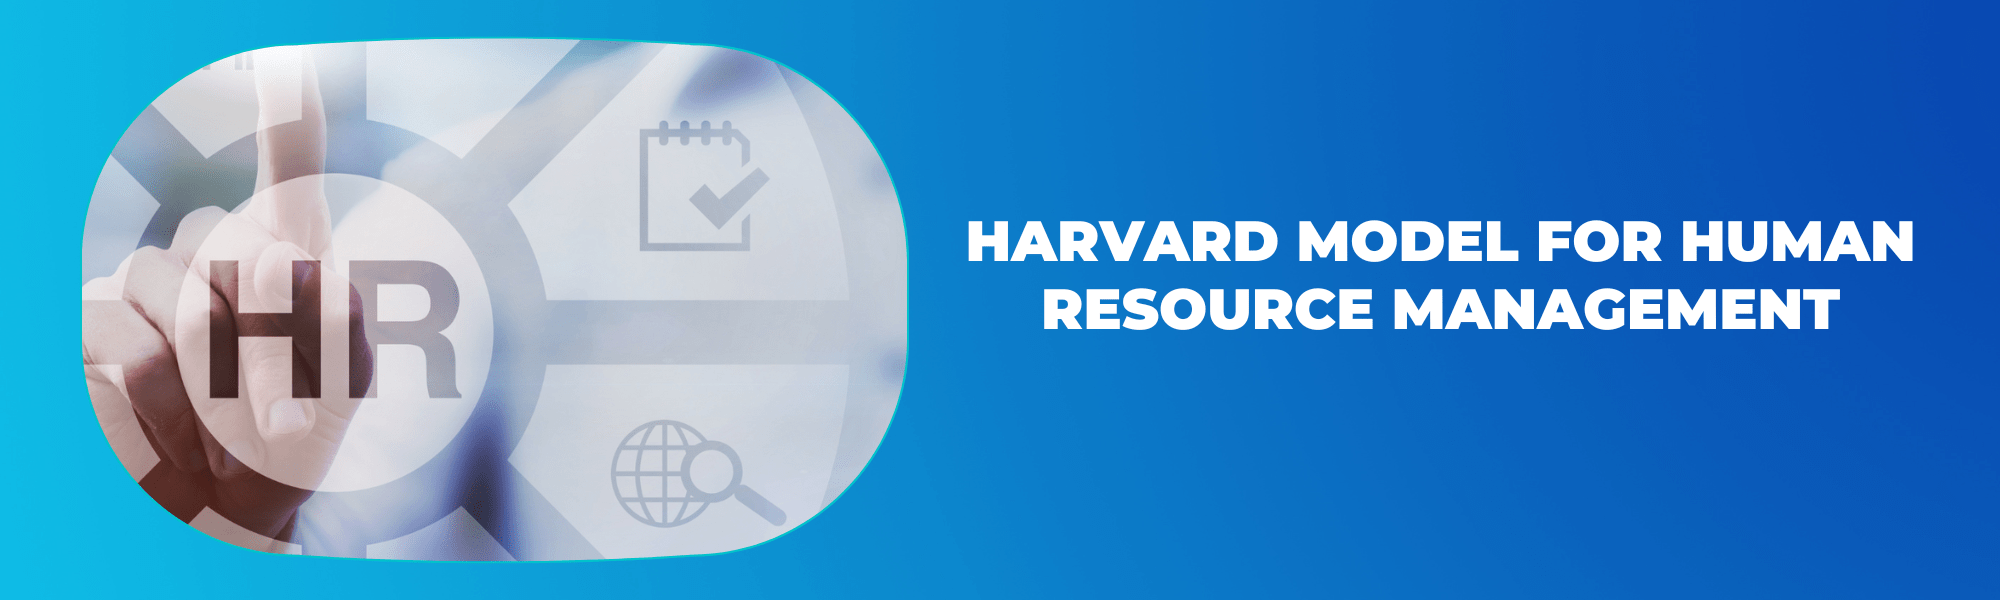 Harvard Model for Human Resource Management